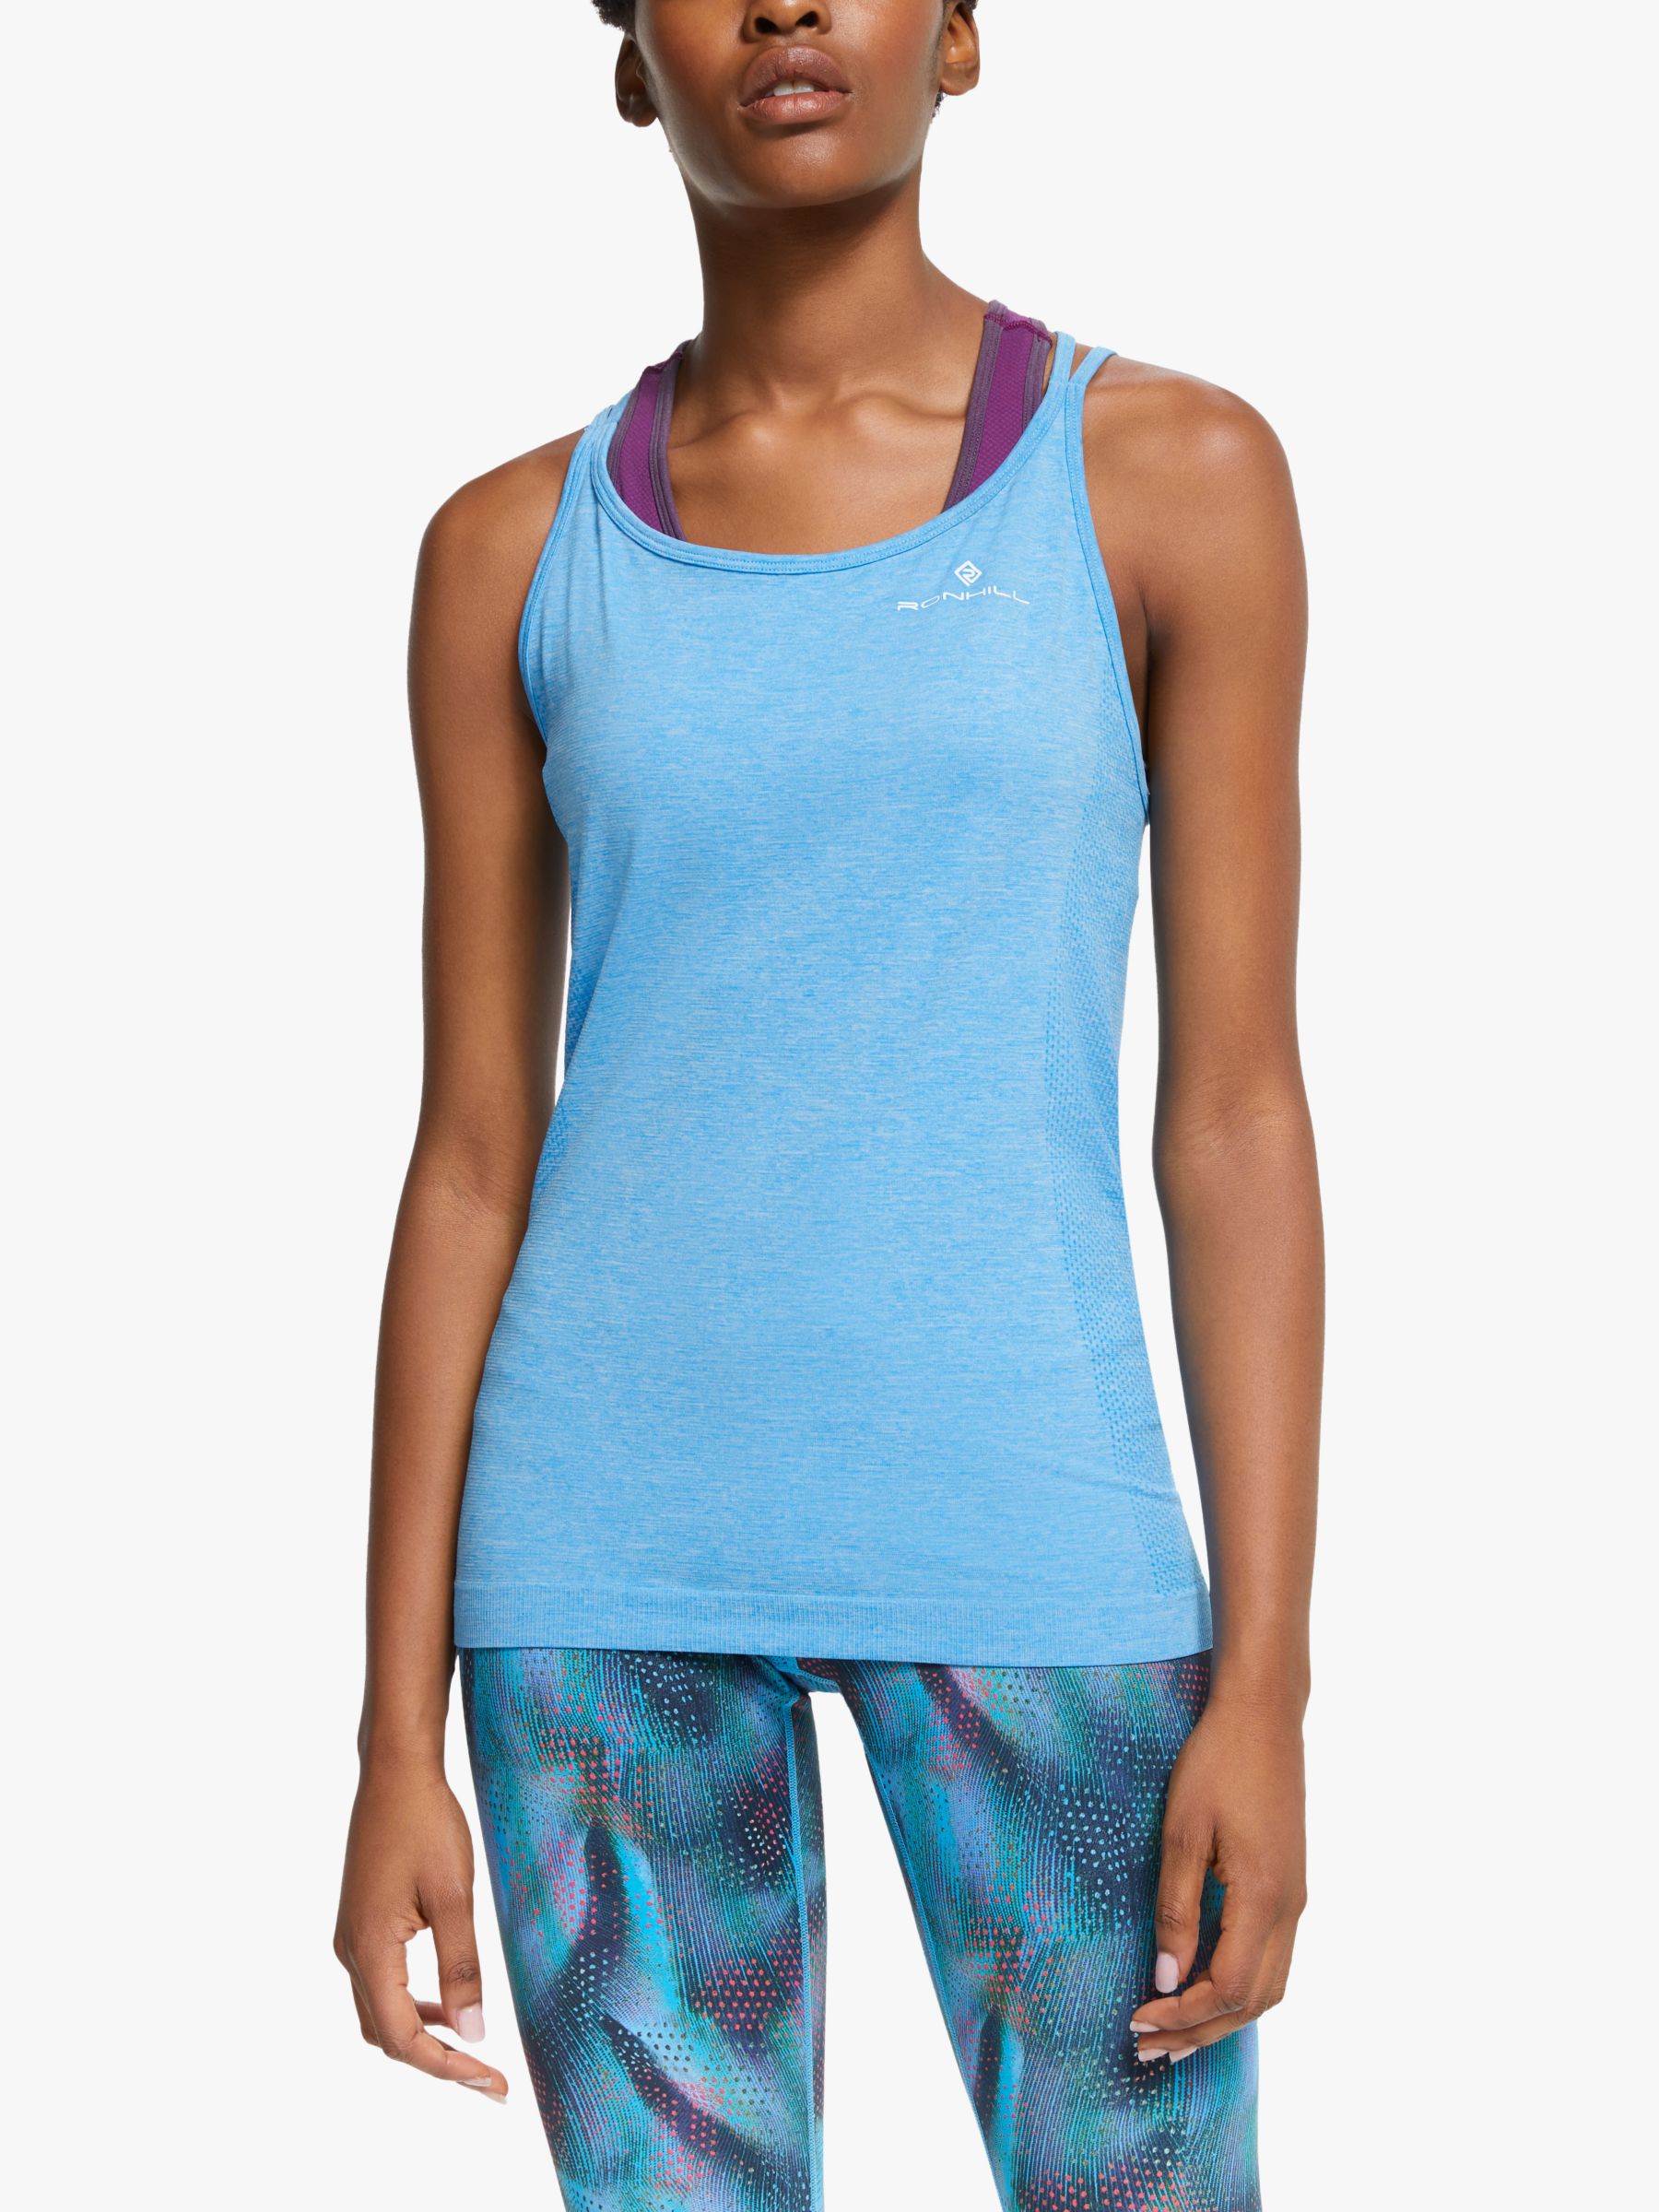 RonHill Womens Infinity Marathon Vest Blue Sports Running Gym Breathable